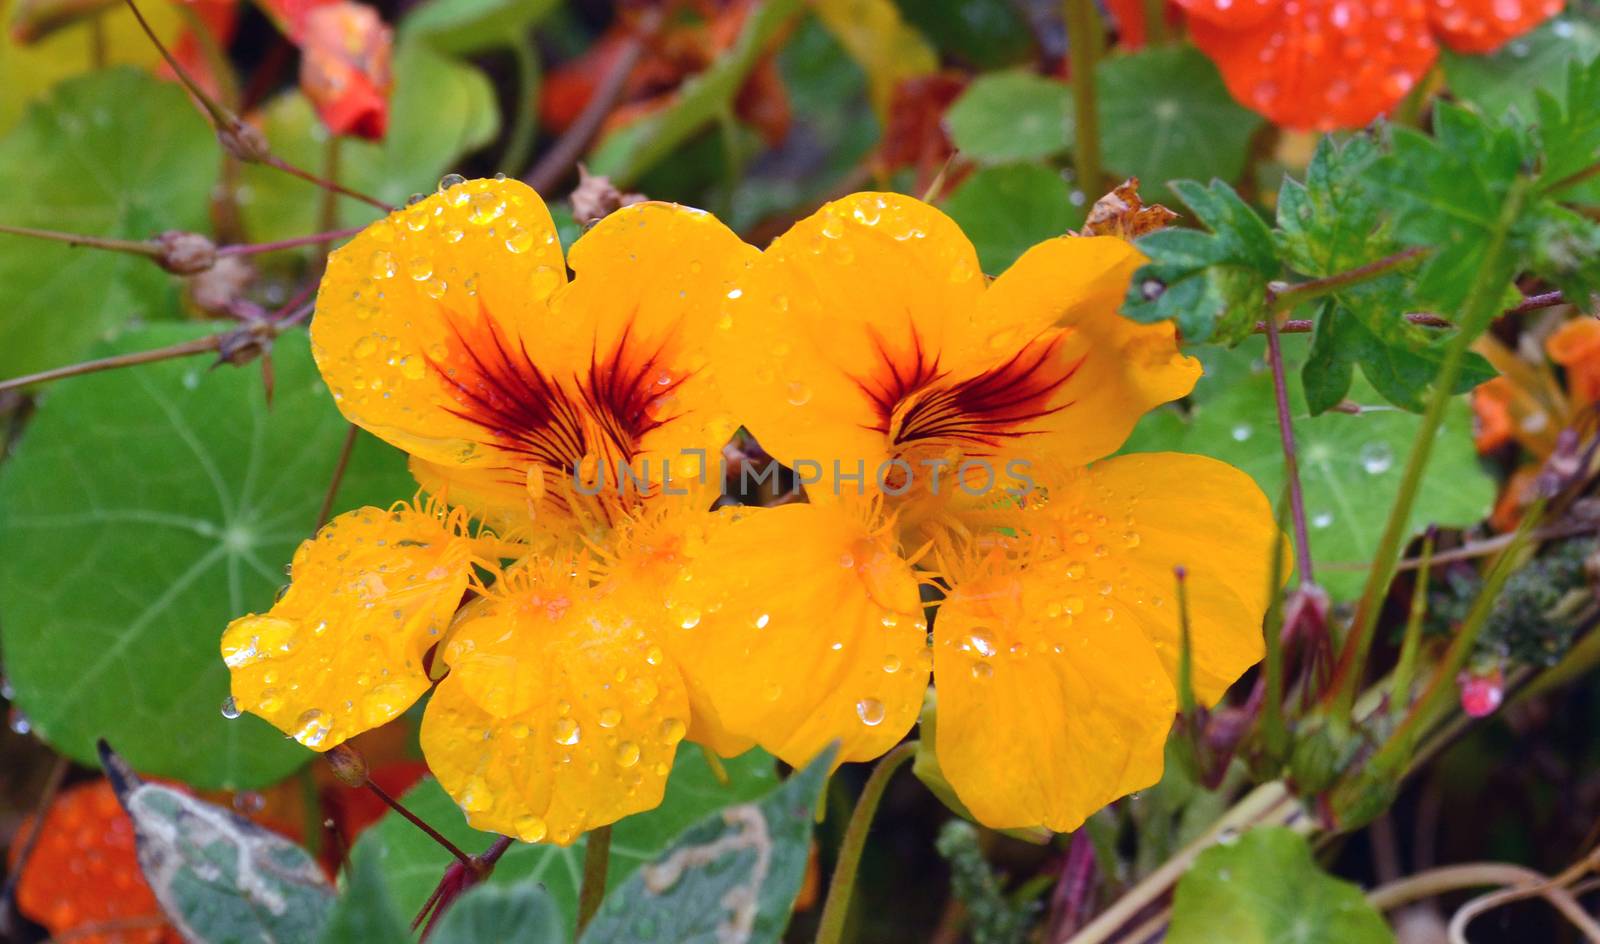 Yellow Nasturtium Tropaeolum flowers withdew drops in a garden by hibrida13